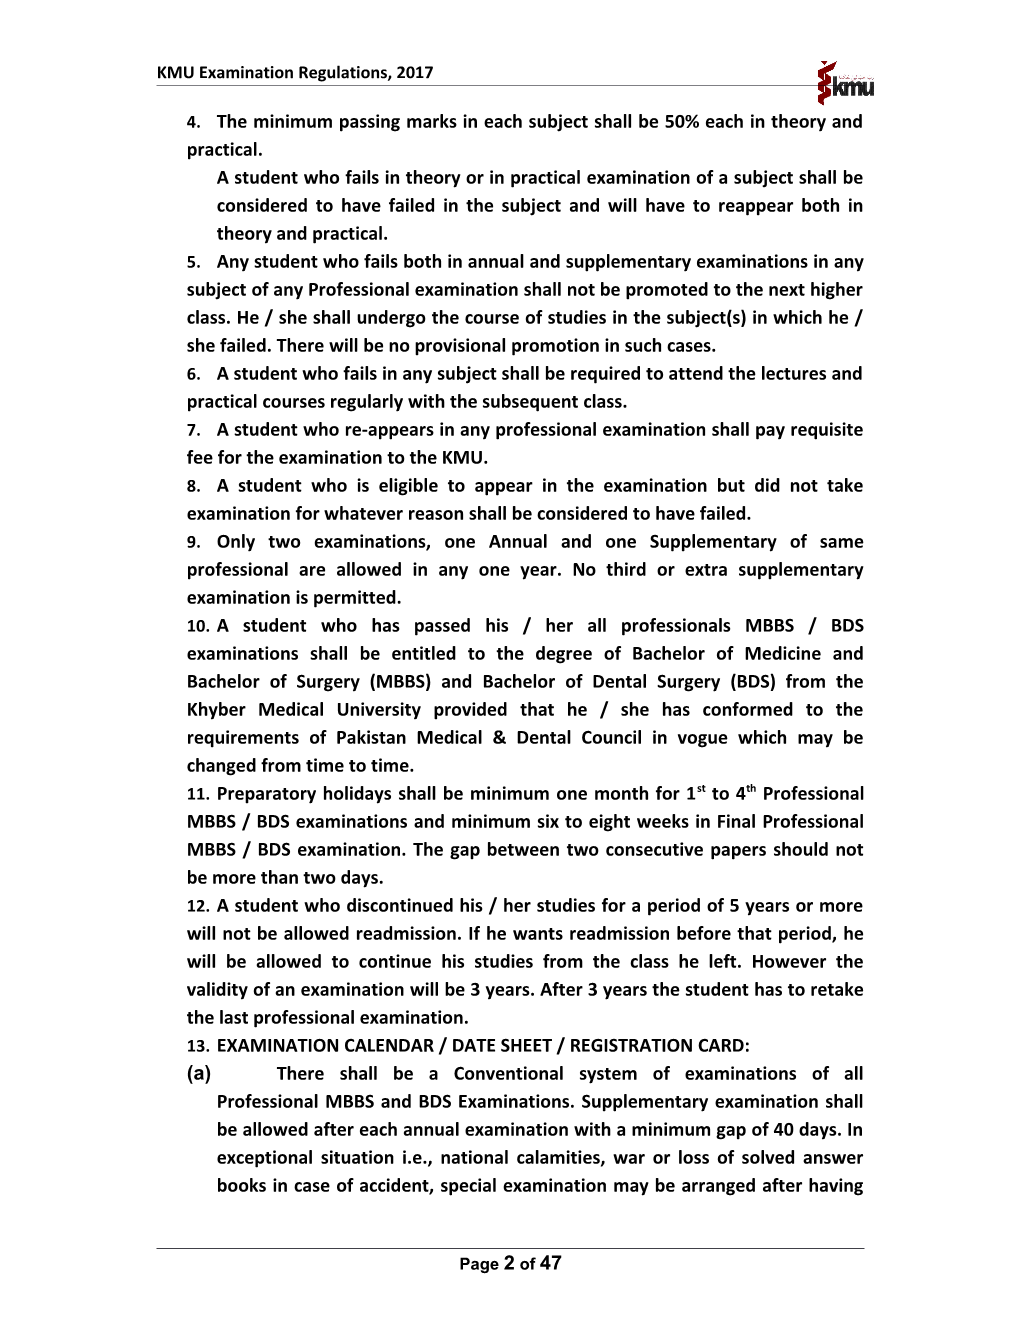 The Khyber Medical University Examinations Regulations, 2017